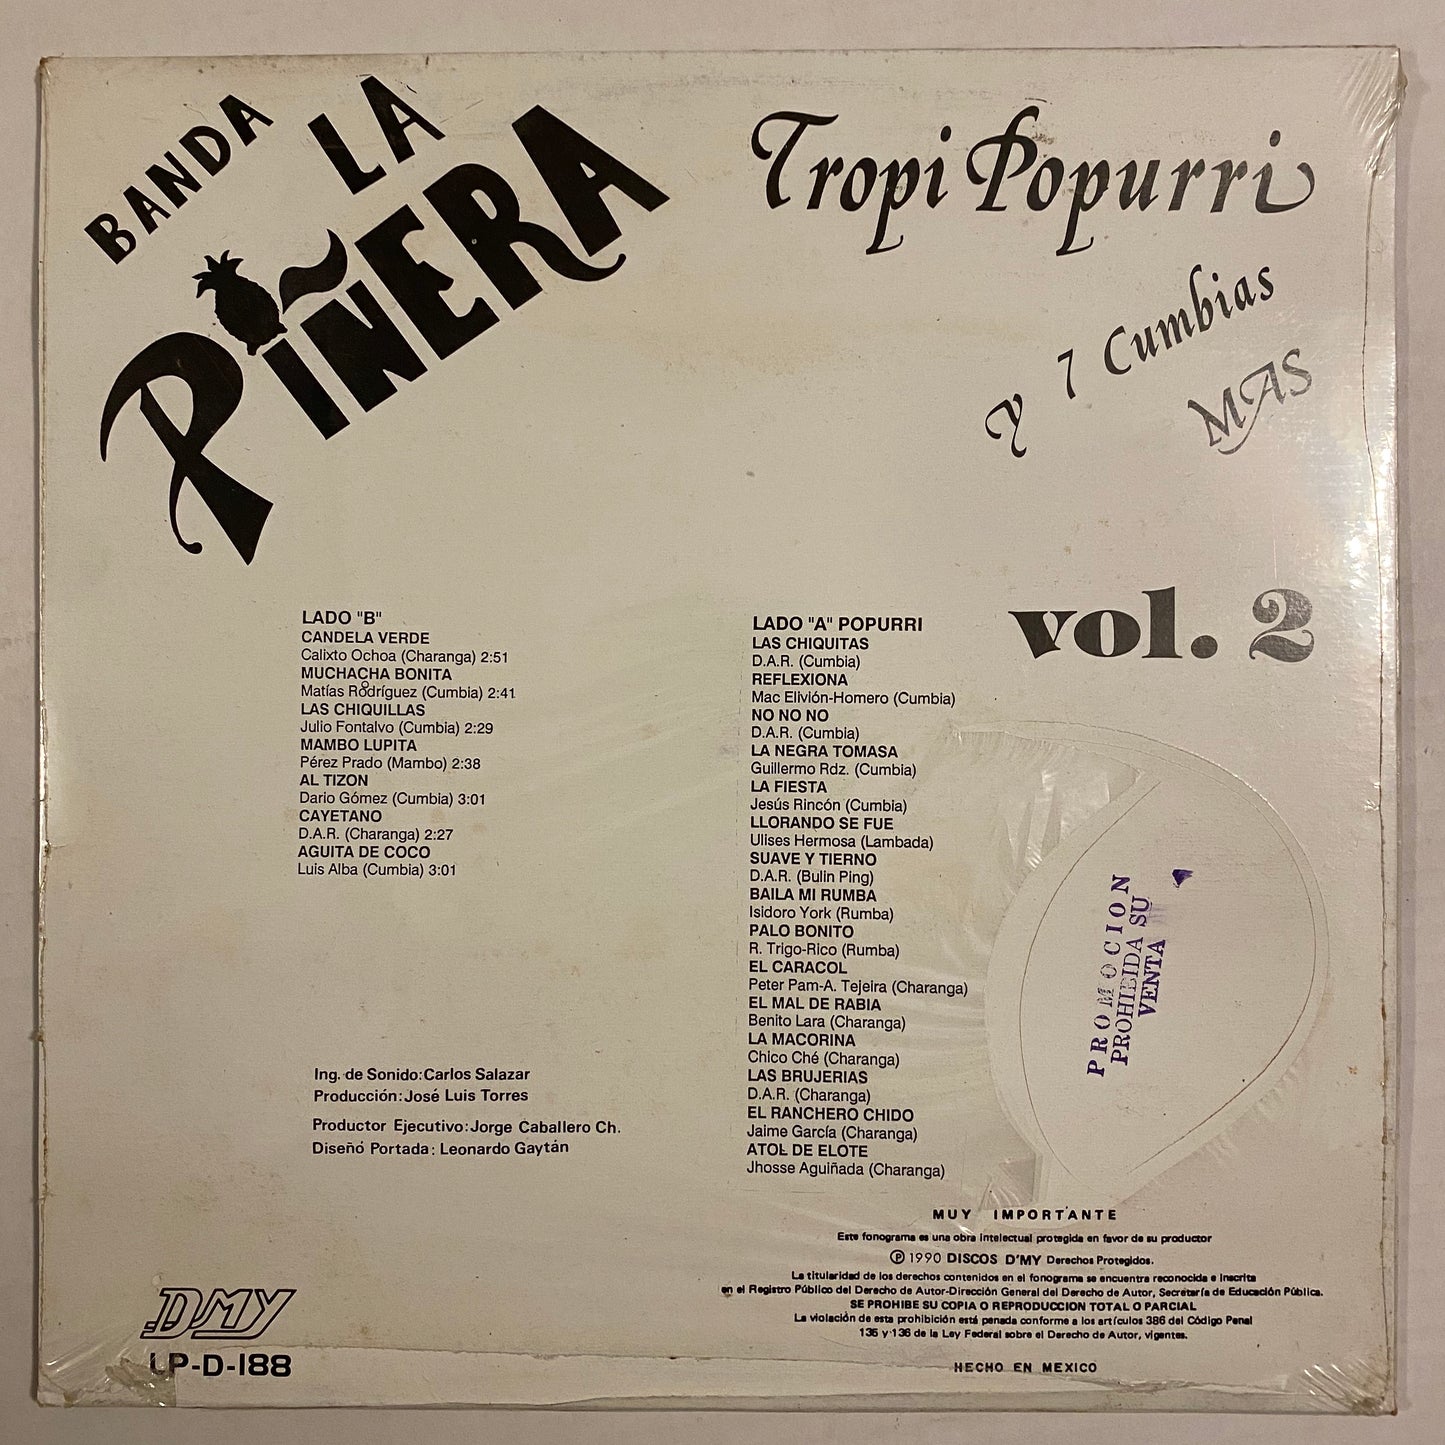 Banda La Pinera-Tropical Popurri y 7 Cumbias Vol. 2 (Sealed Vinyl)